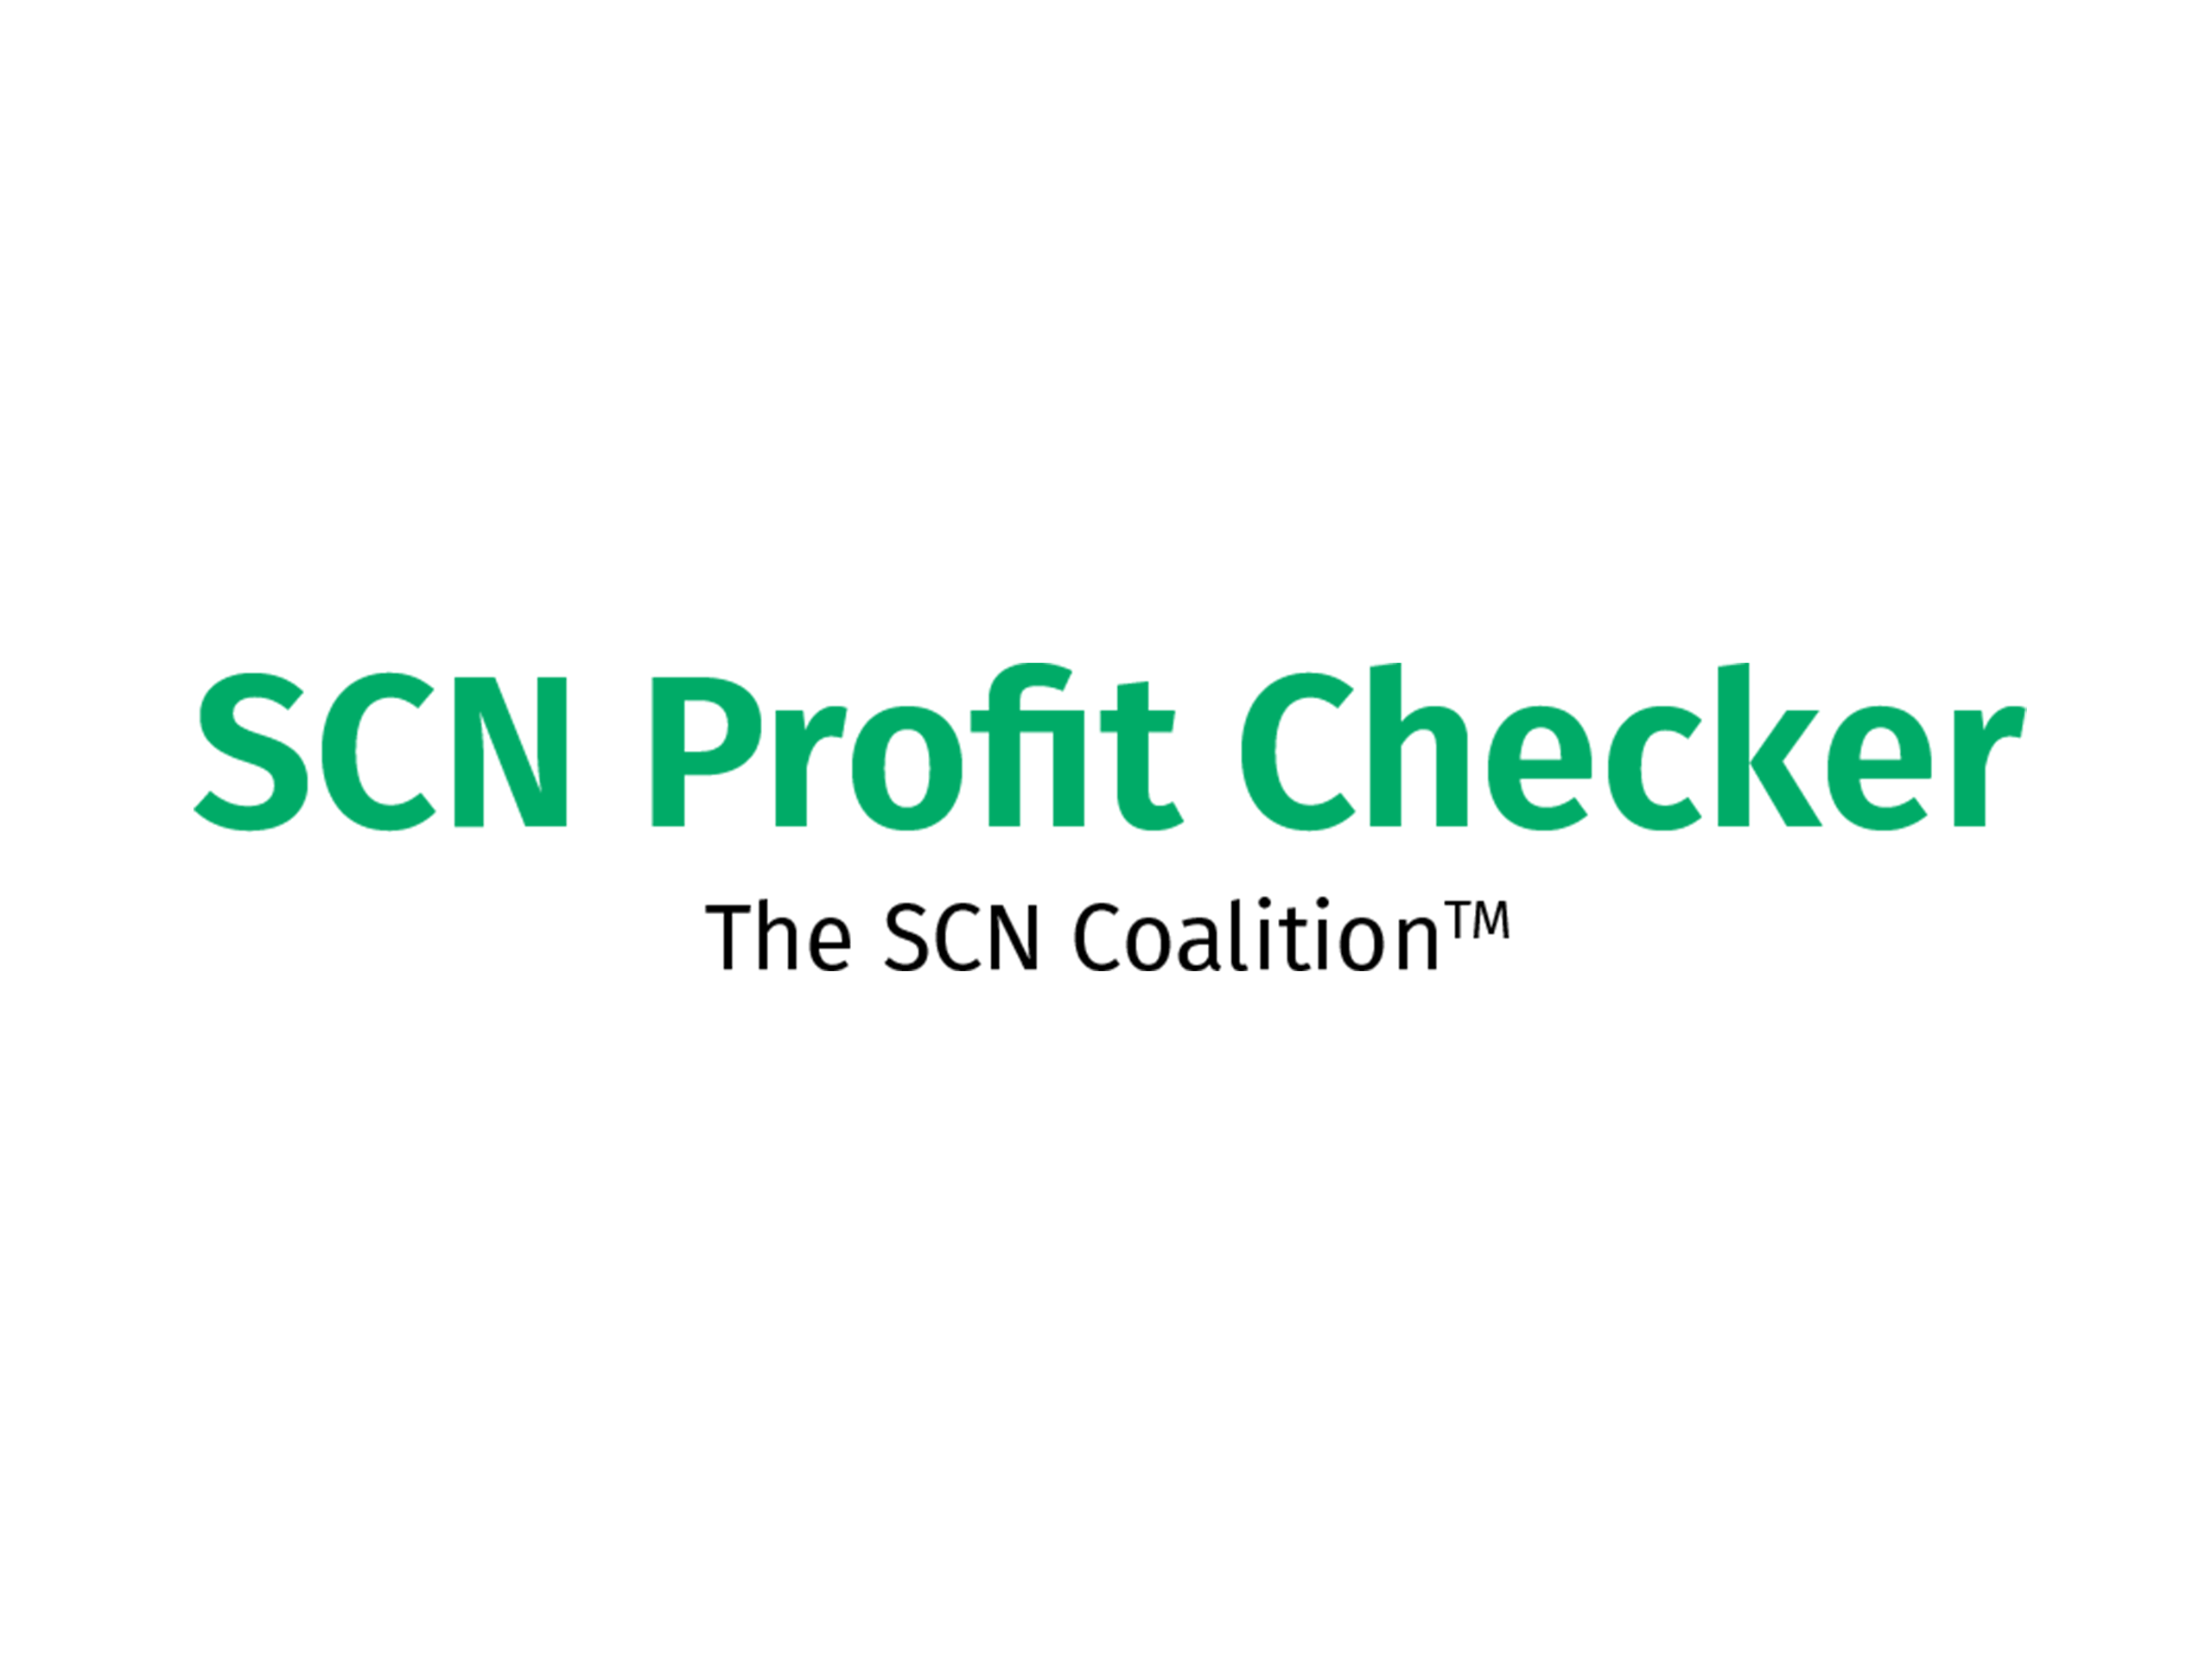 SCN Profit Checker Hardmark